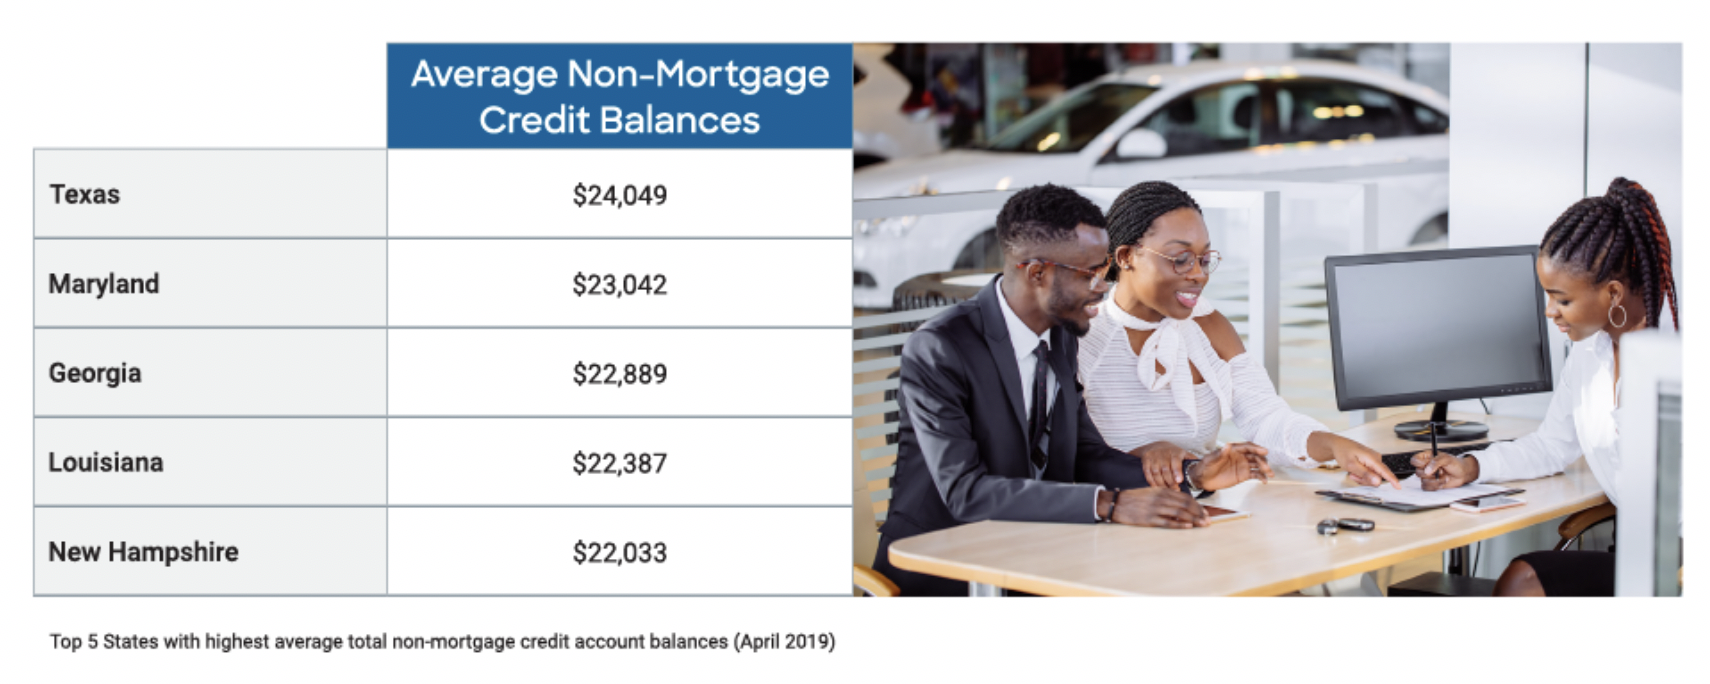 Average Non-Mortgage Credit Balances